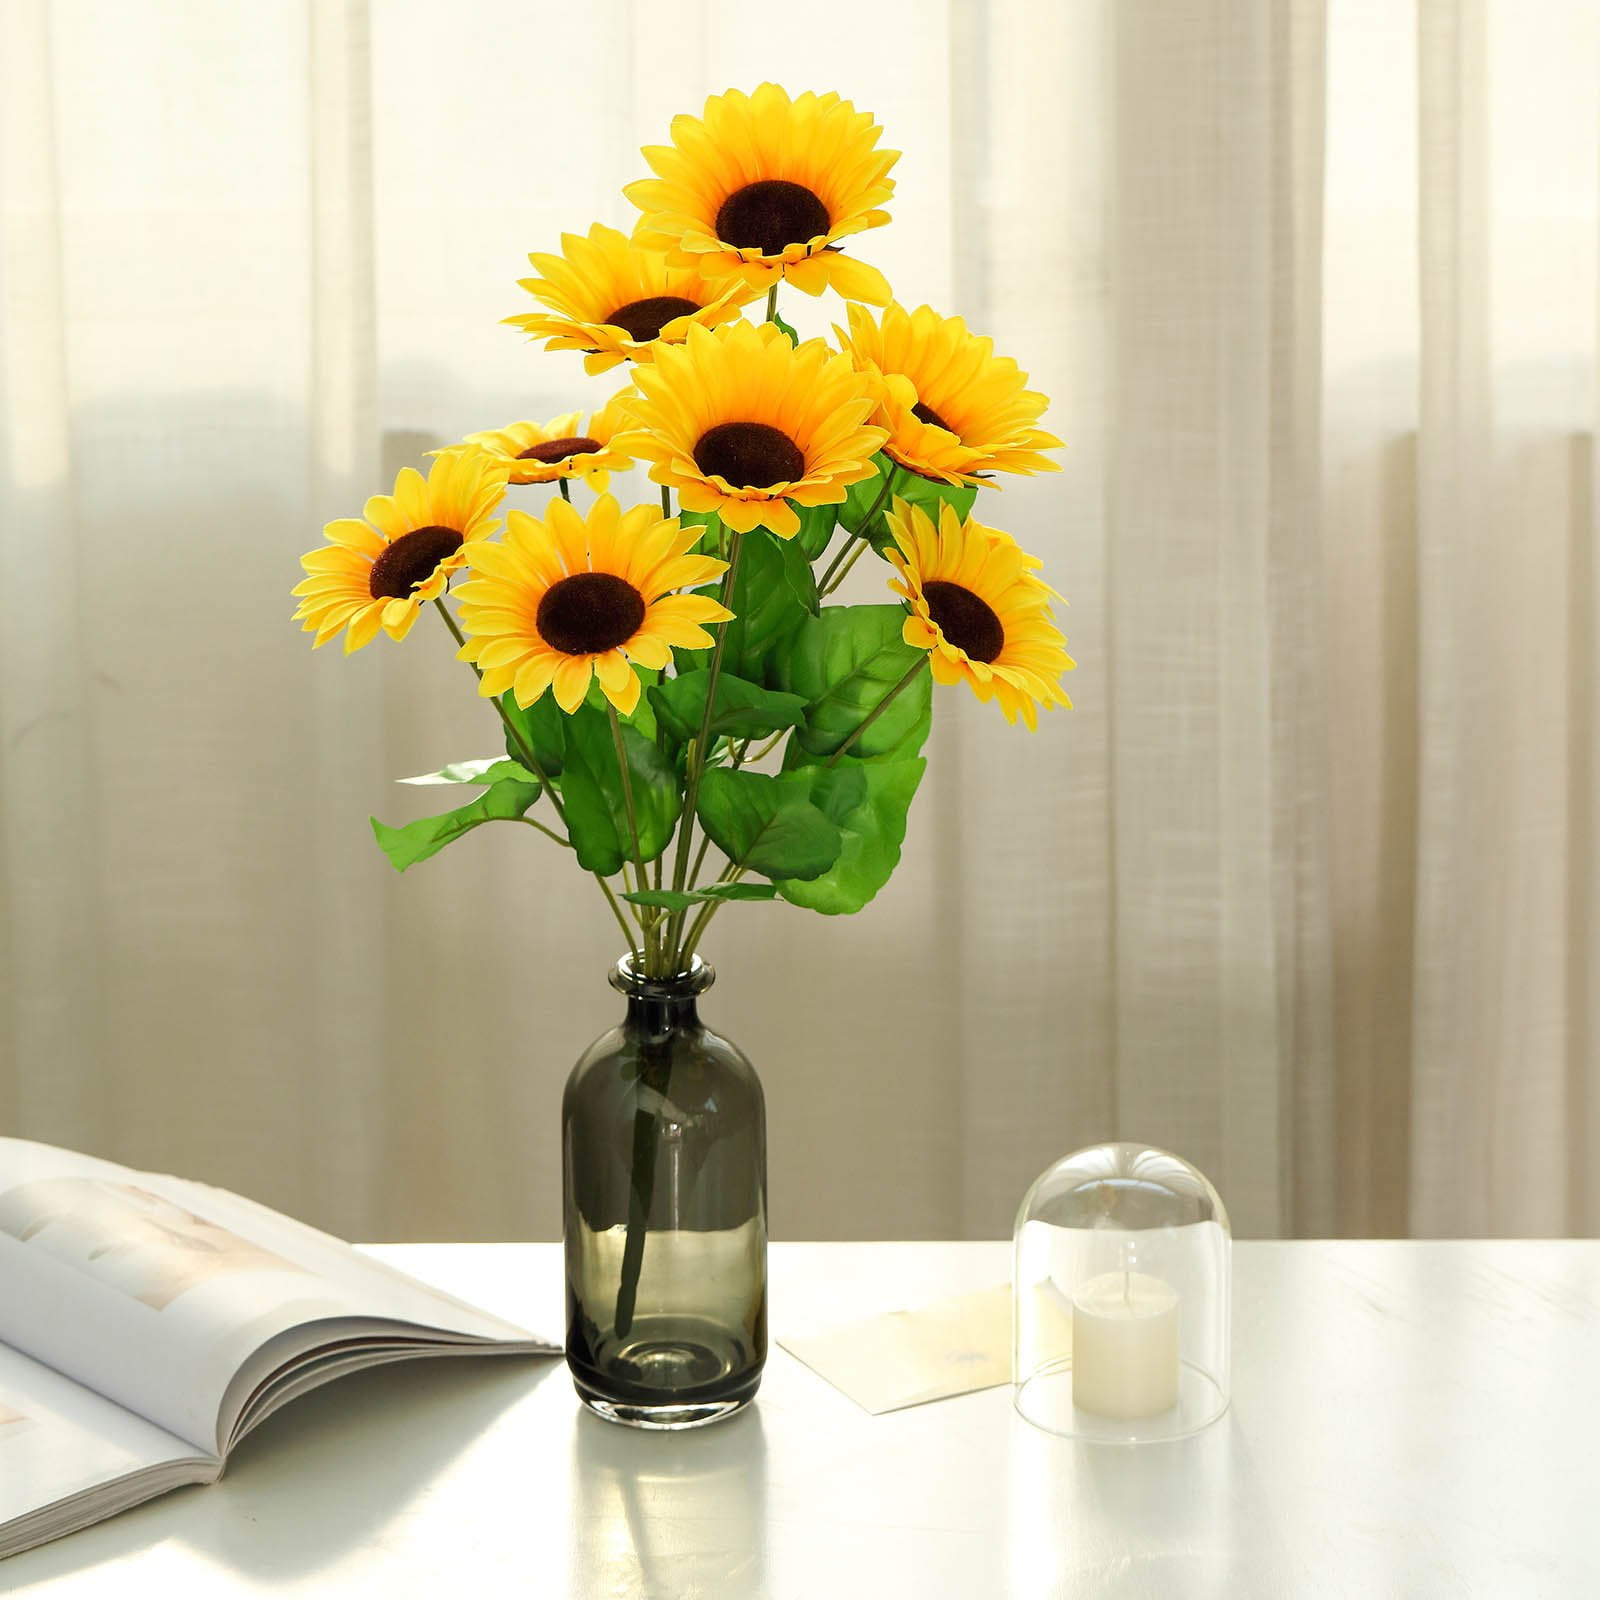 6 ft Yellow Sunflower Silk Garlands Wedding Flowers Decorations WHOLESALE SALE 